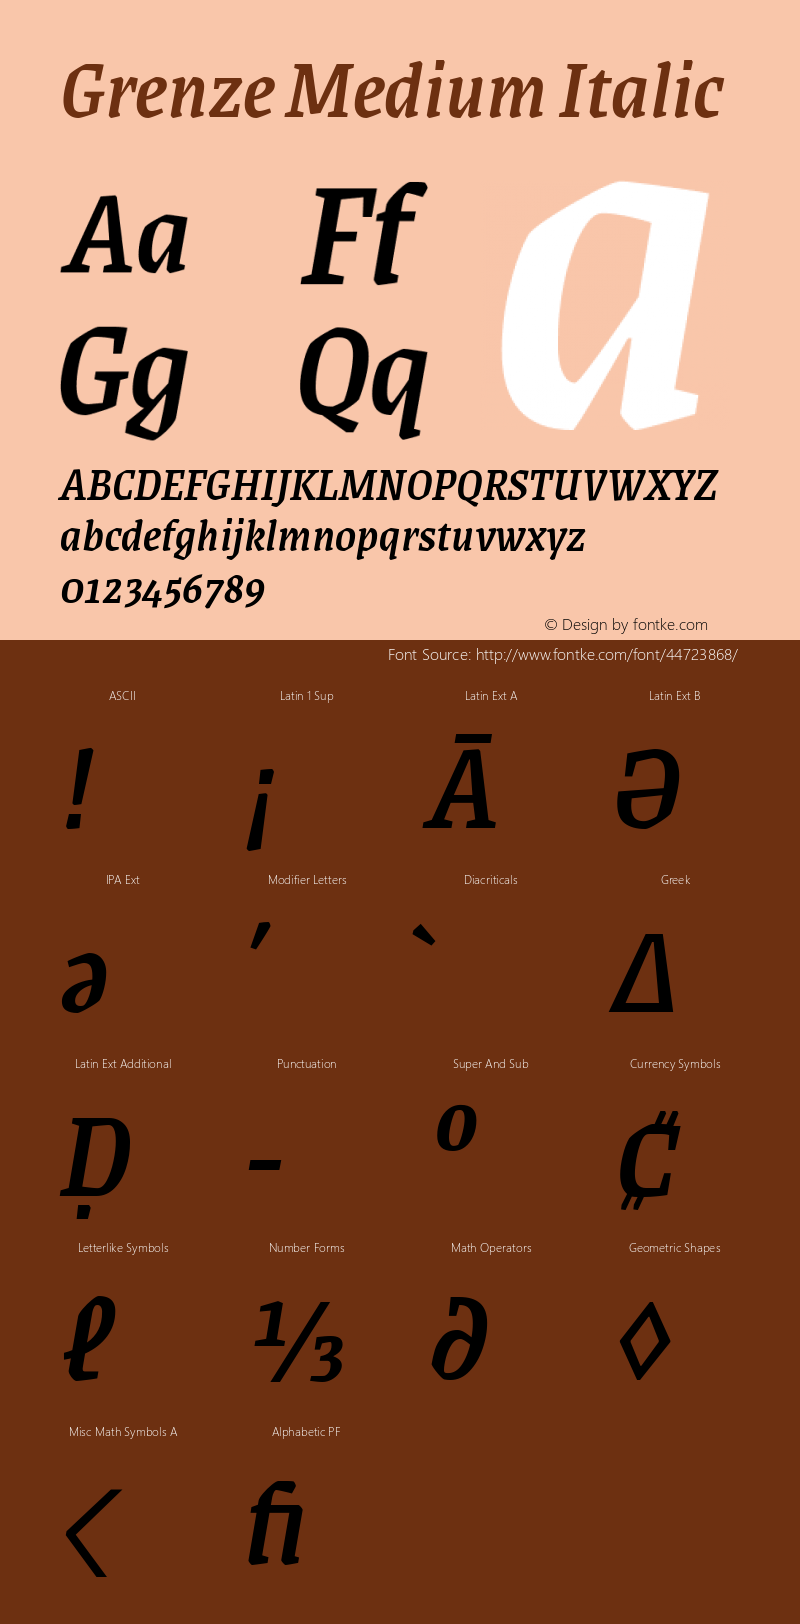 Grenze Medium Italic Version 1.002; ttfautohint (v1.8) Font Sample